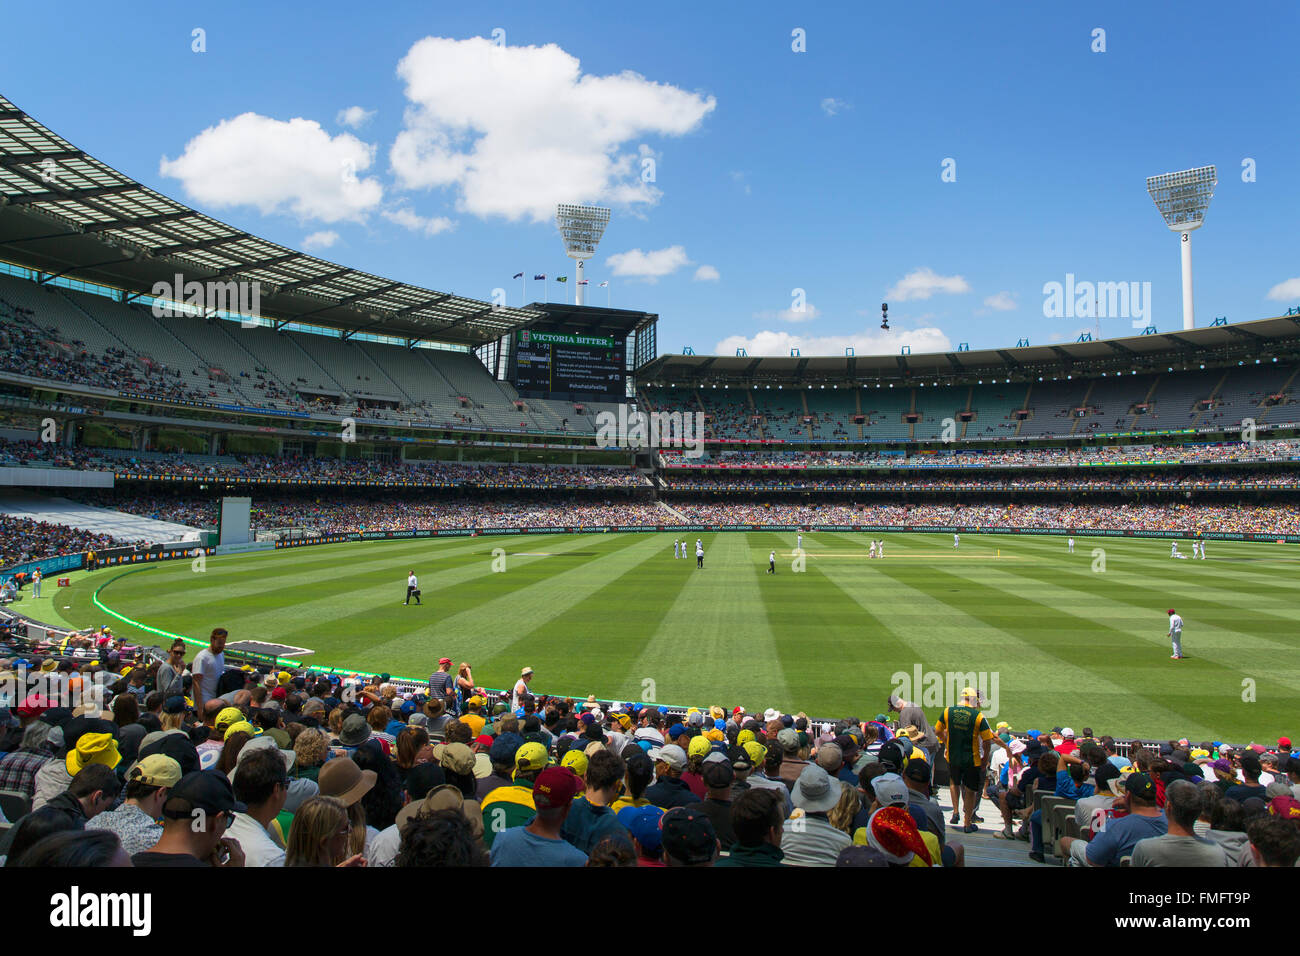 Cricket match at Melbourne Cricket Ground (MCG), Melbourne, Victoria